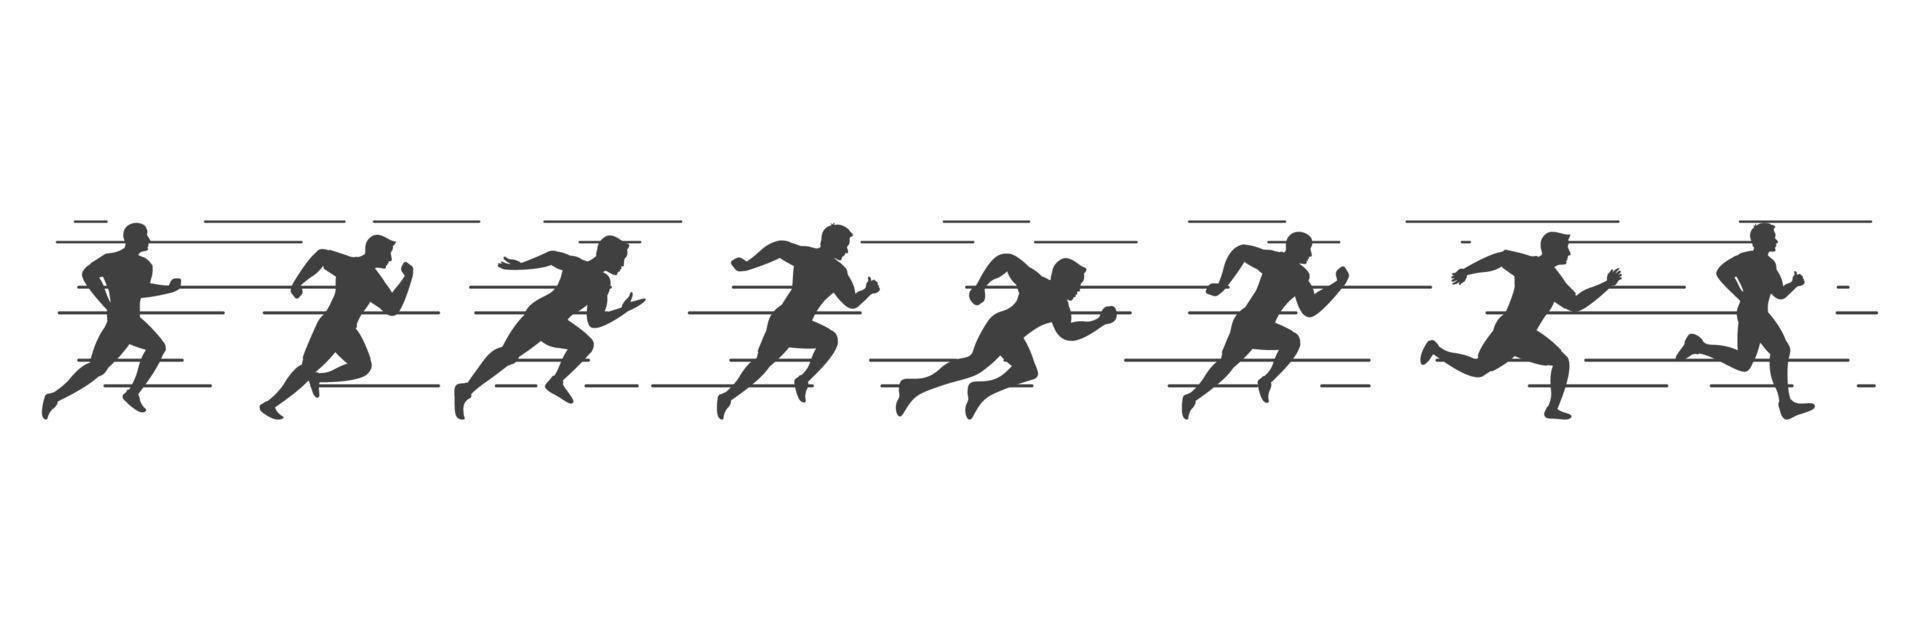 sport run silhouette vector icon illustration